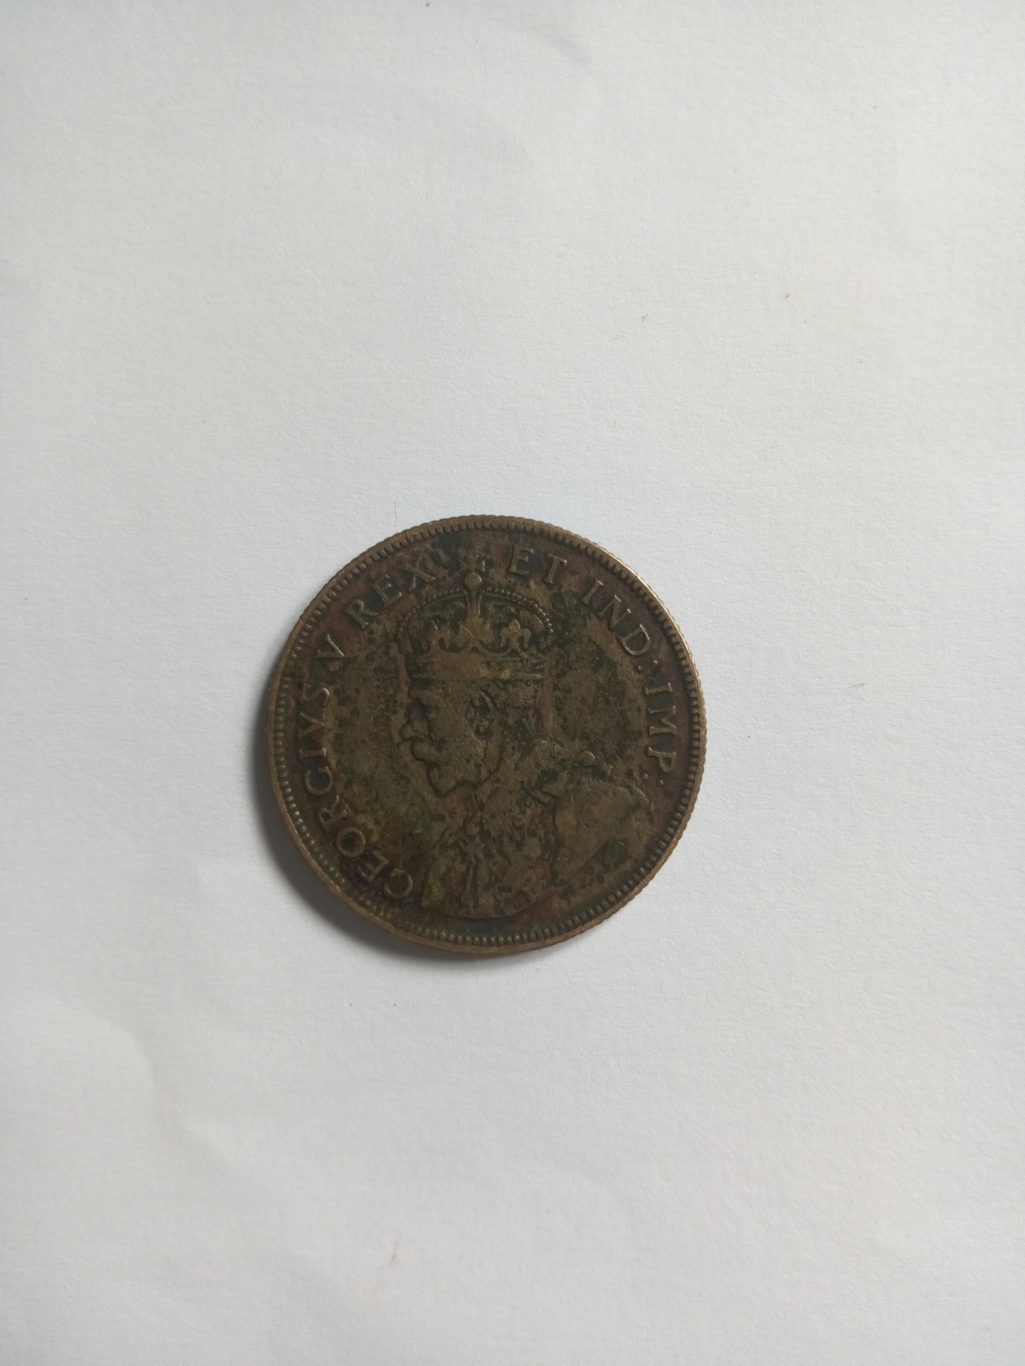 1924_georgivs rex 1 shilling